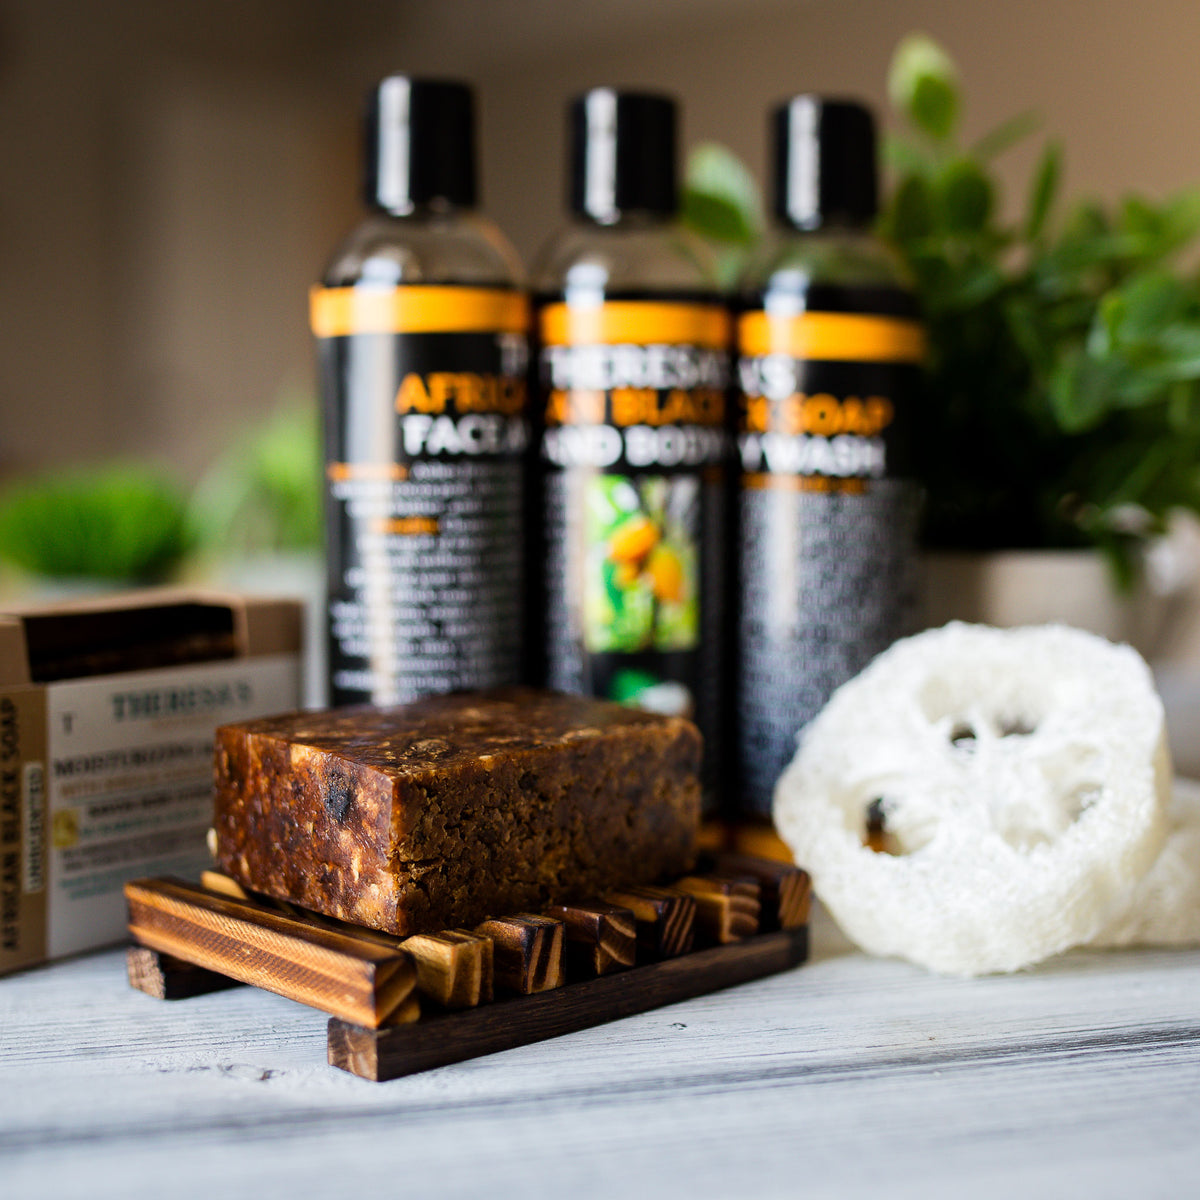 100% Organic & Natural African Black Soap